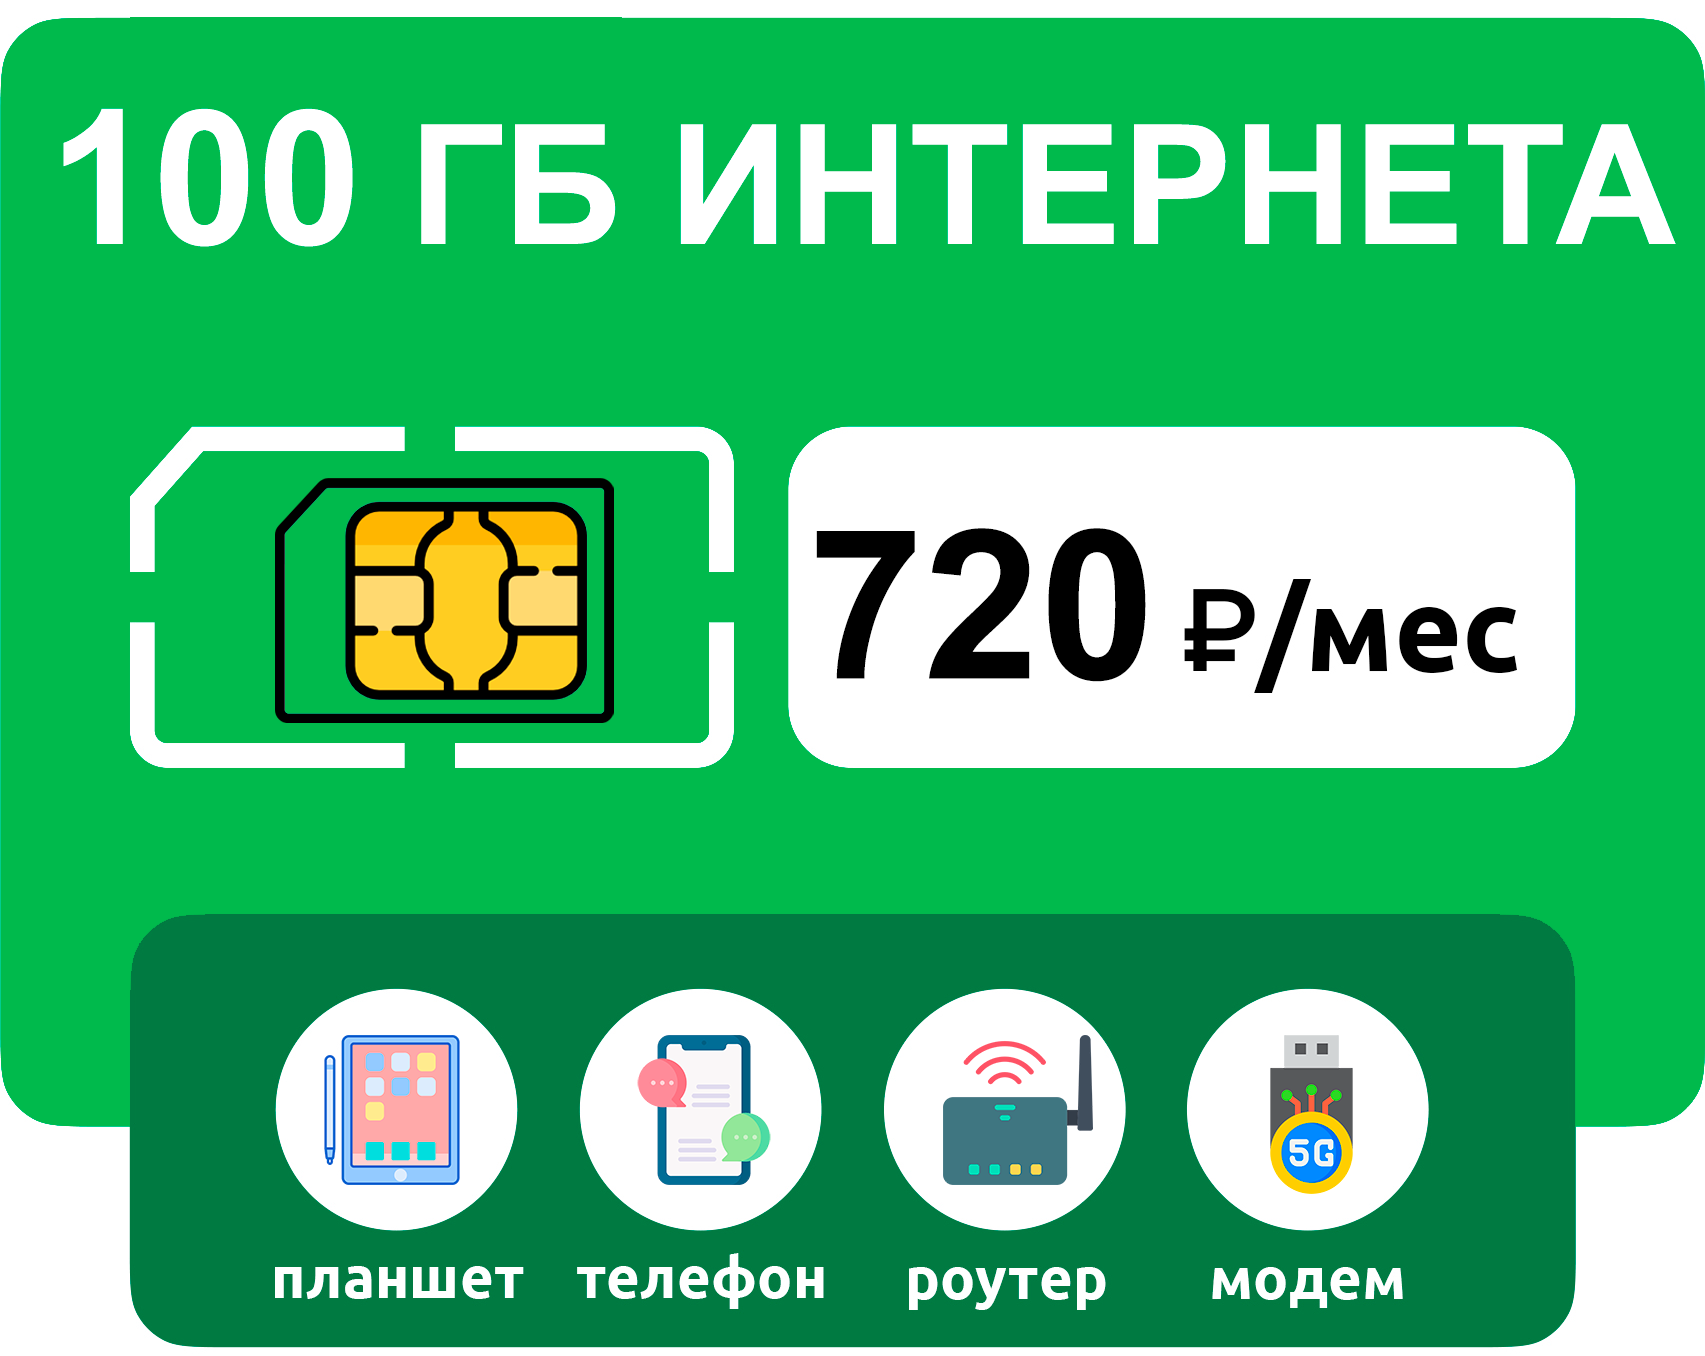 SIM-карта 100 гб интернета 3G/4G за 720 руб/мес (модемы, роутеры, планшеты) + раздача, торренты (Россия)